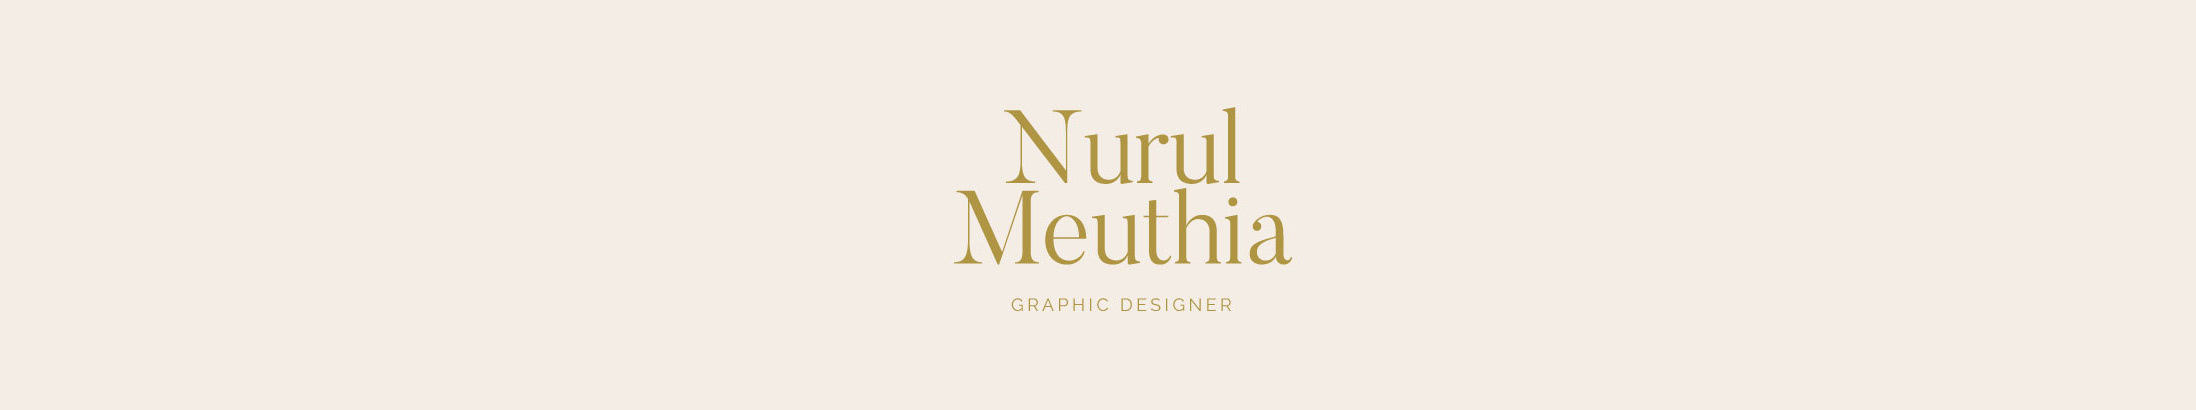 Nurul Meuthia のプロファイルバナー